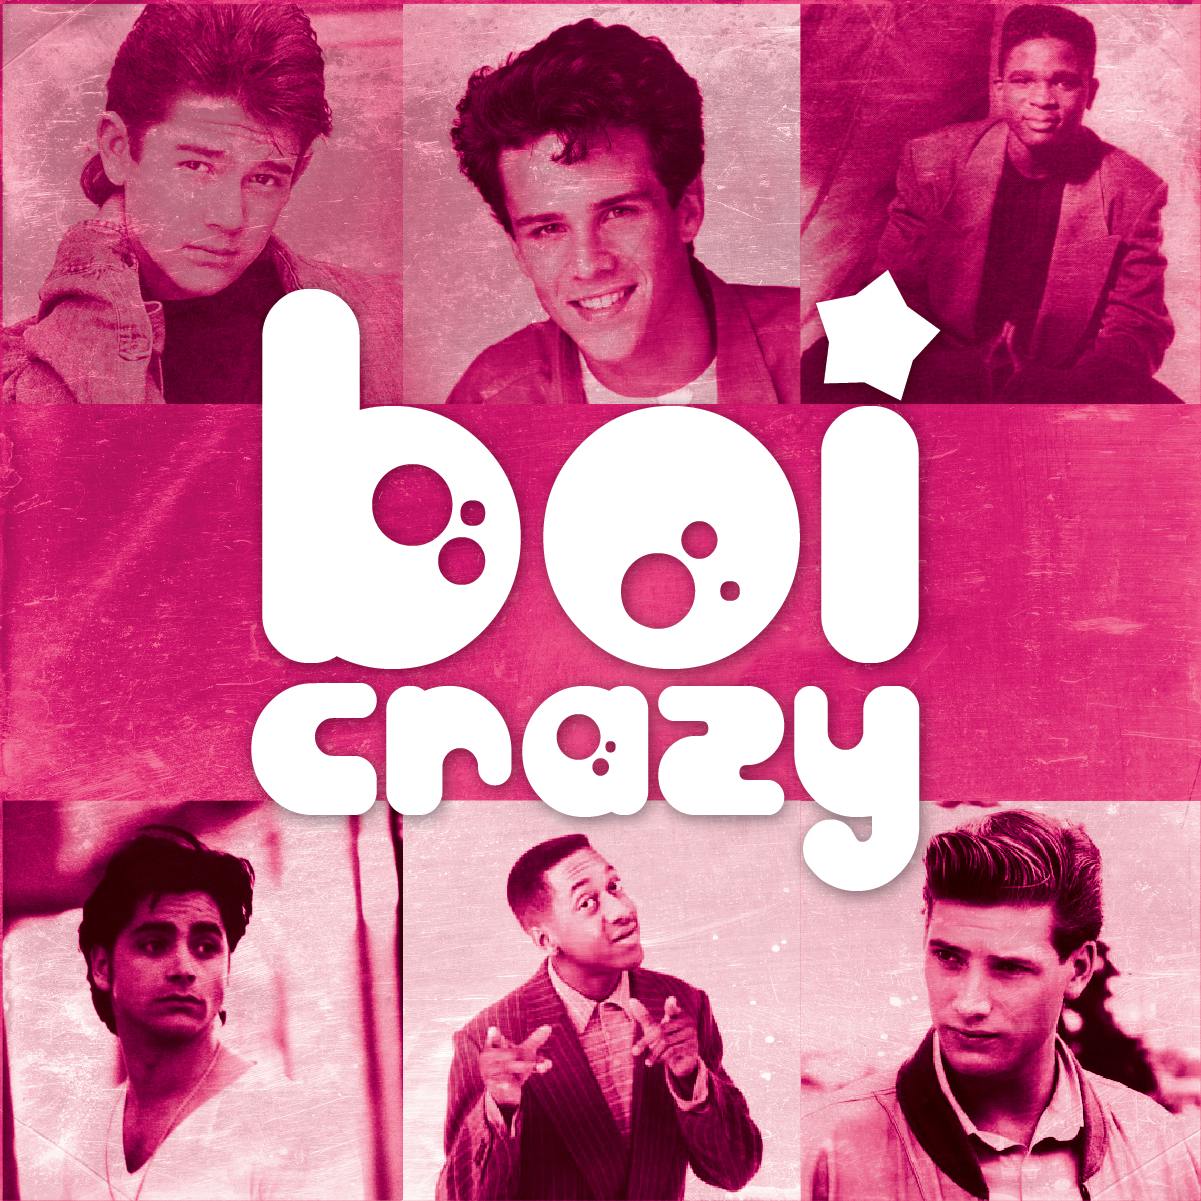 Boi Crazy: ABC's TGIF Television Lineup